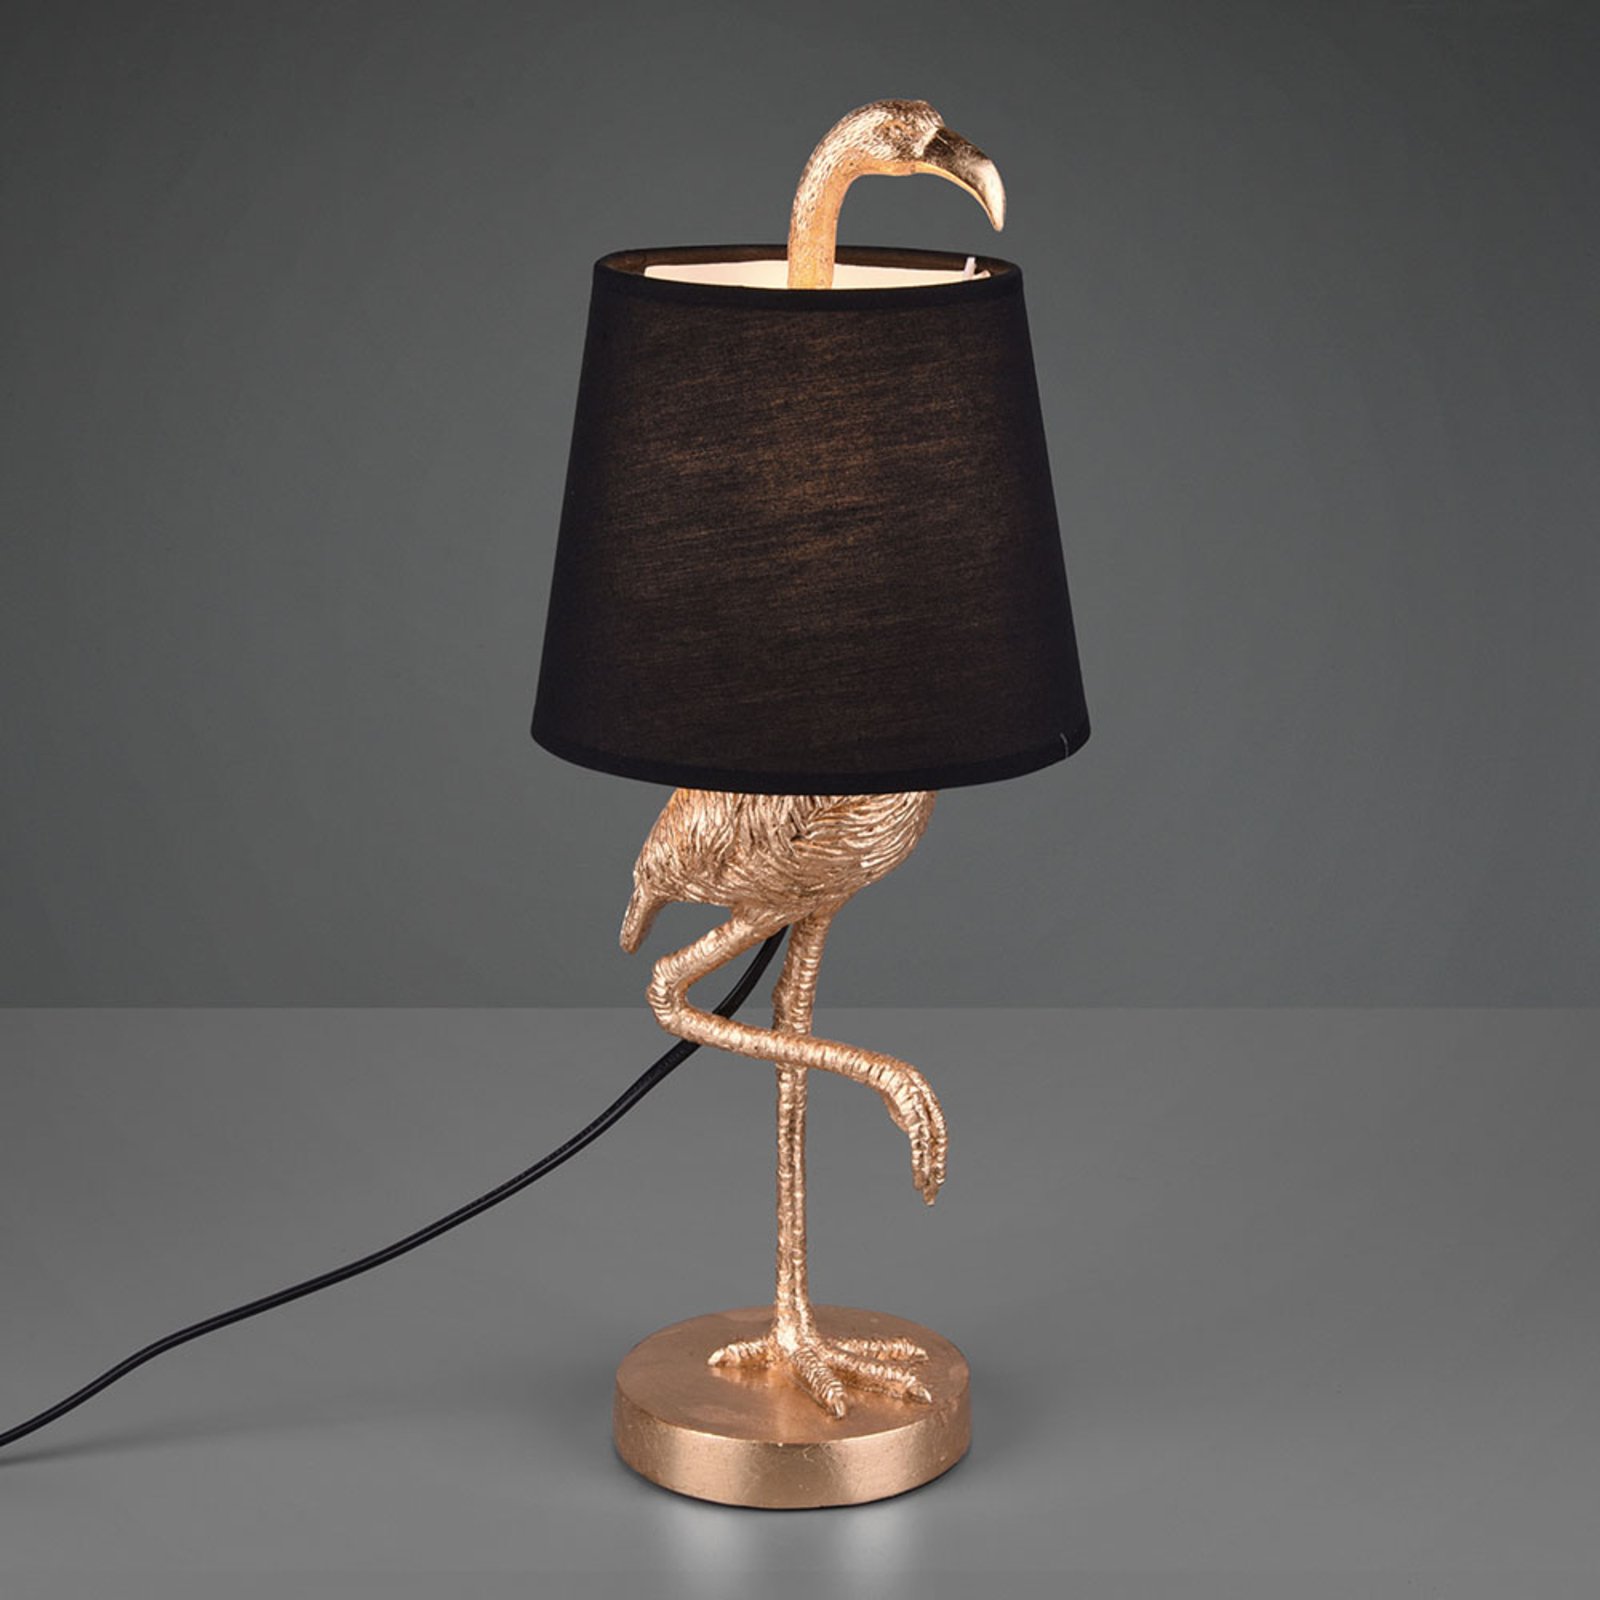 Lola table lamp with flamingo figure, black/gold